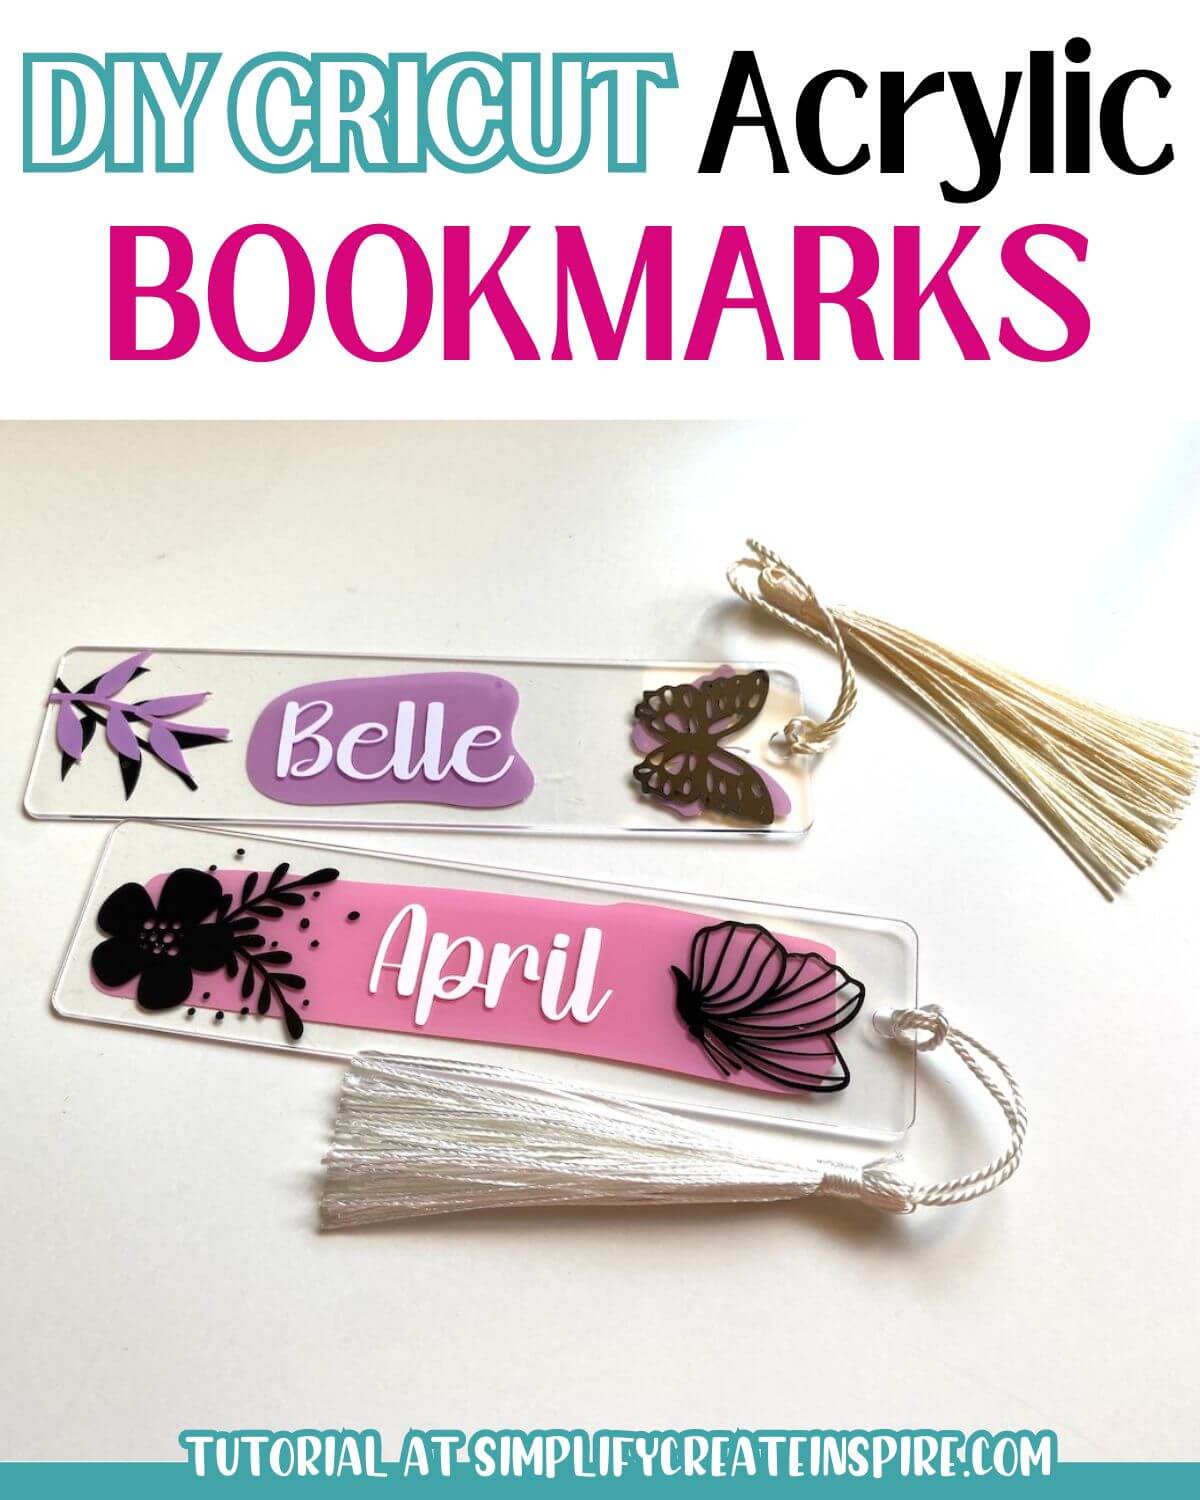 How to make diy acrylic bookmarks with cricut joy.